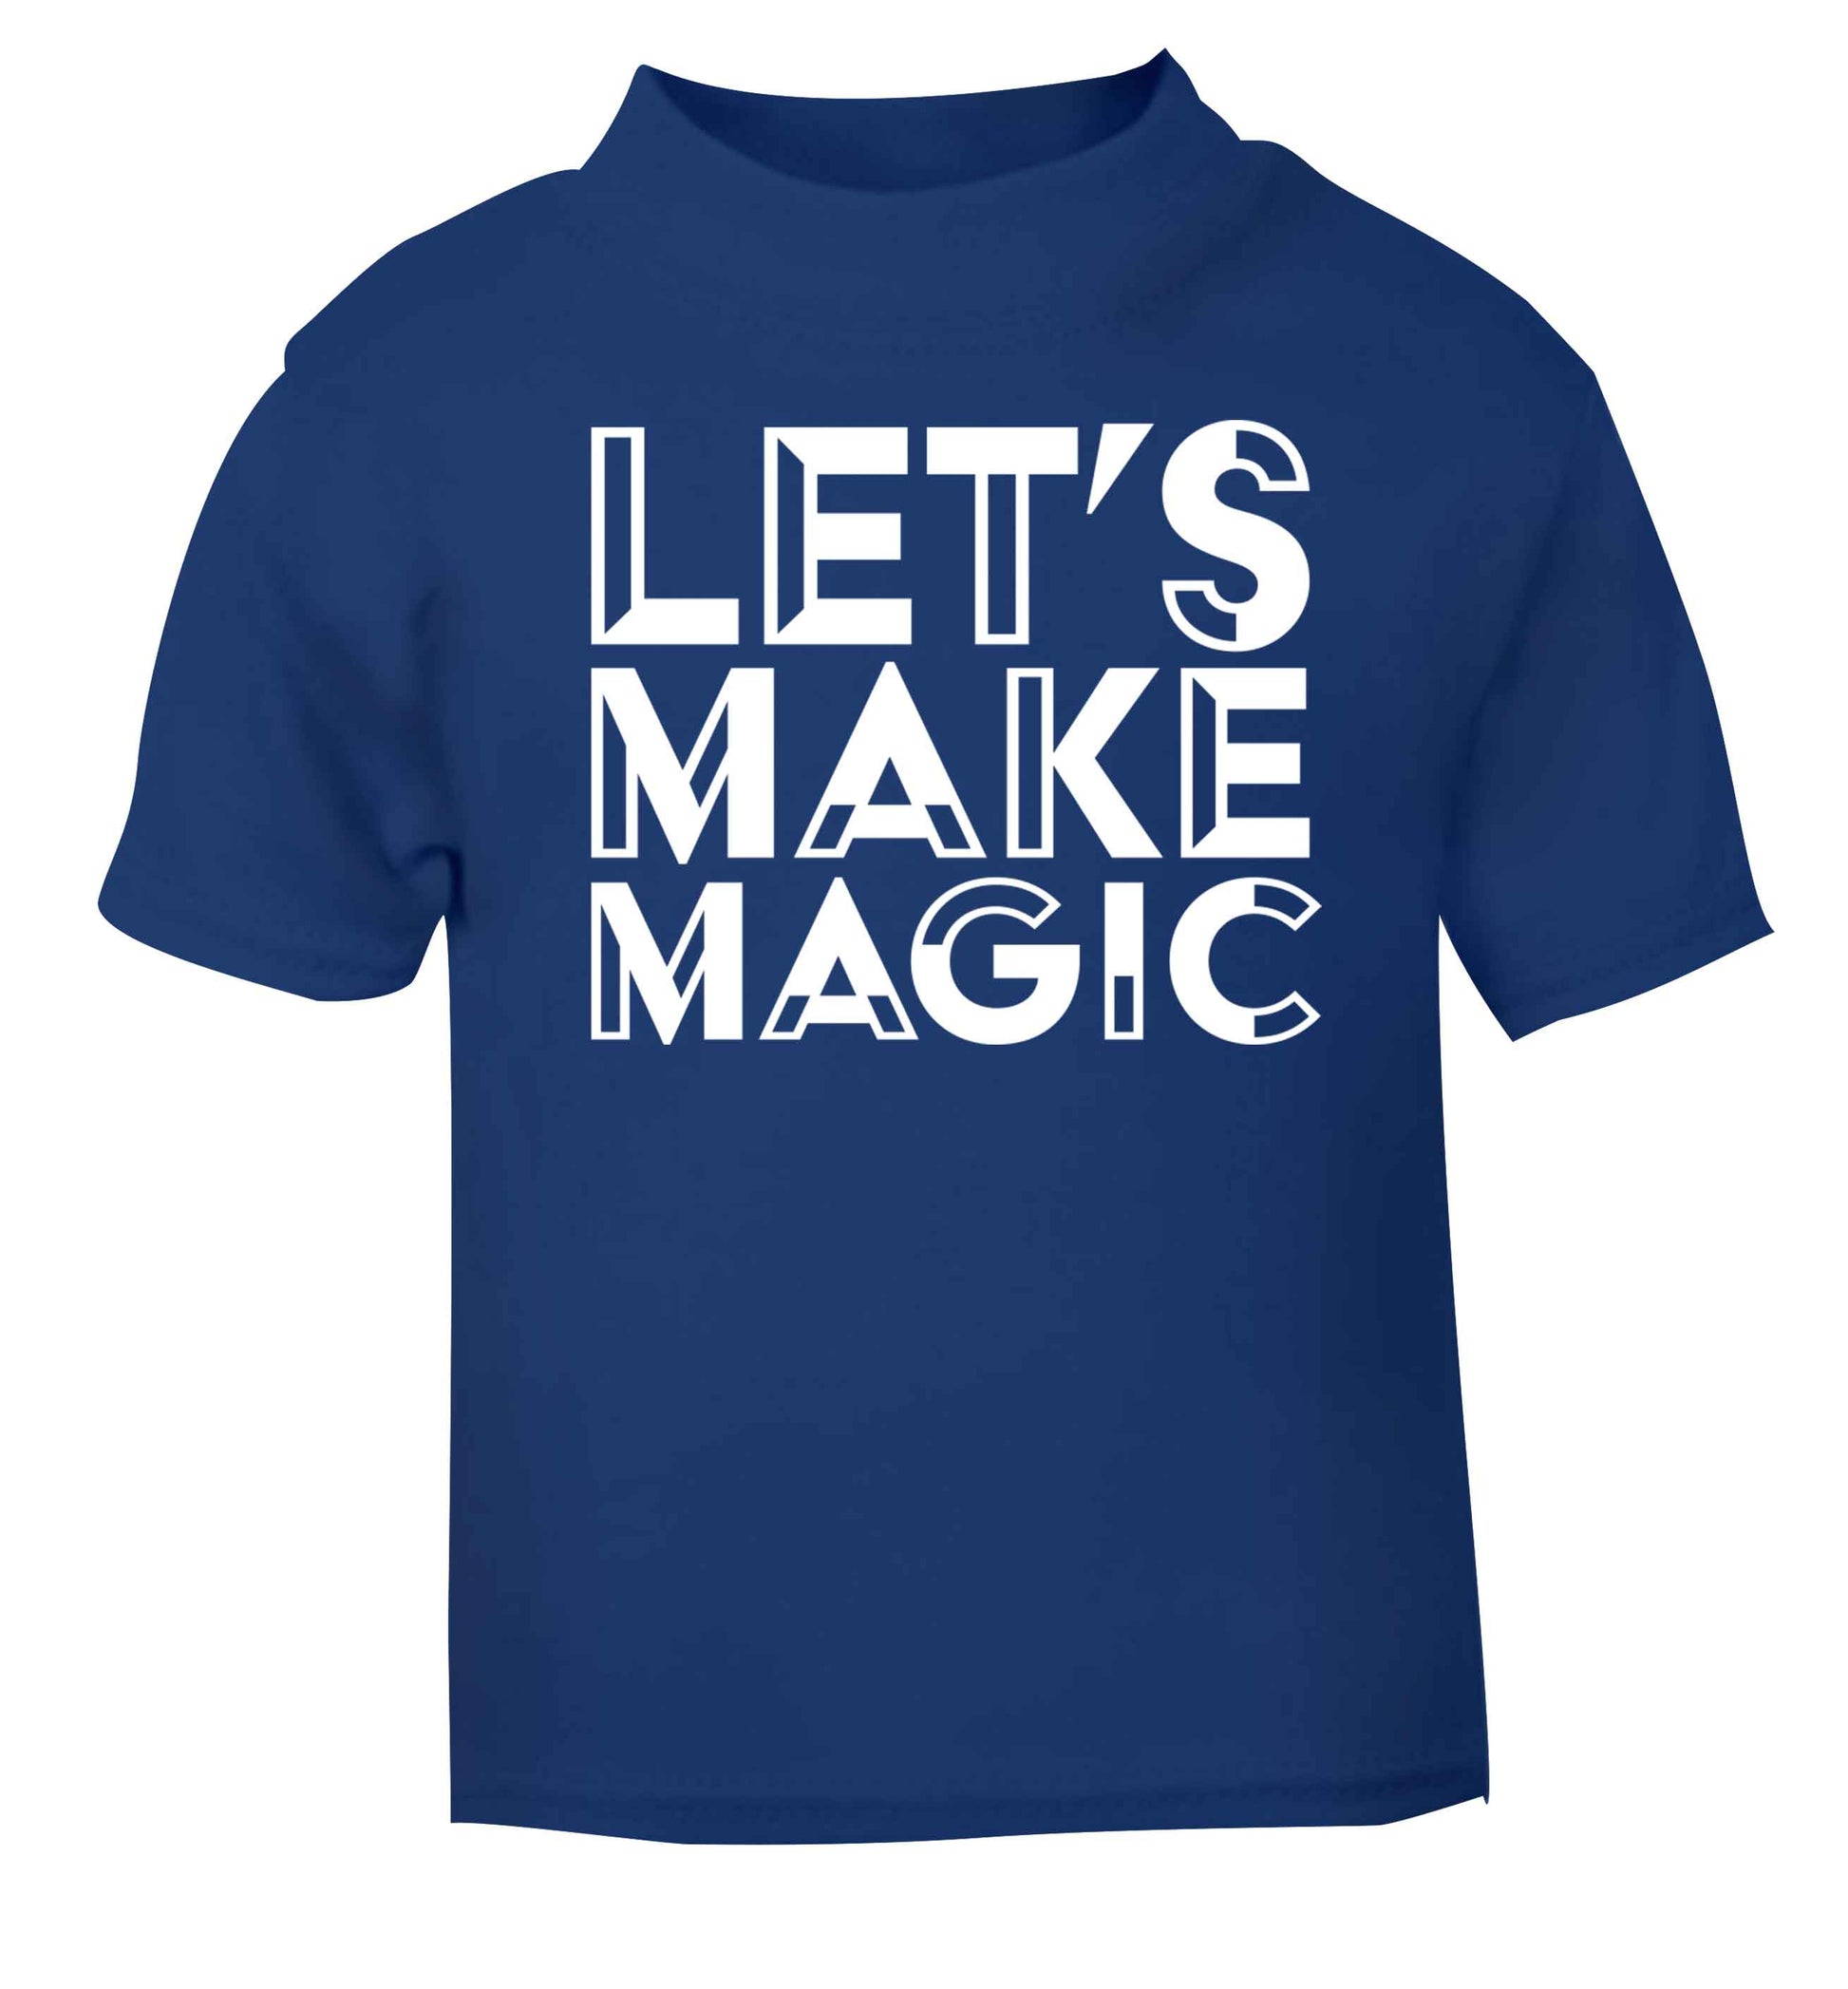 Let's make magic blue baby toddler Tshirt 2 Years